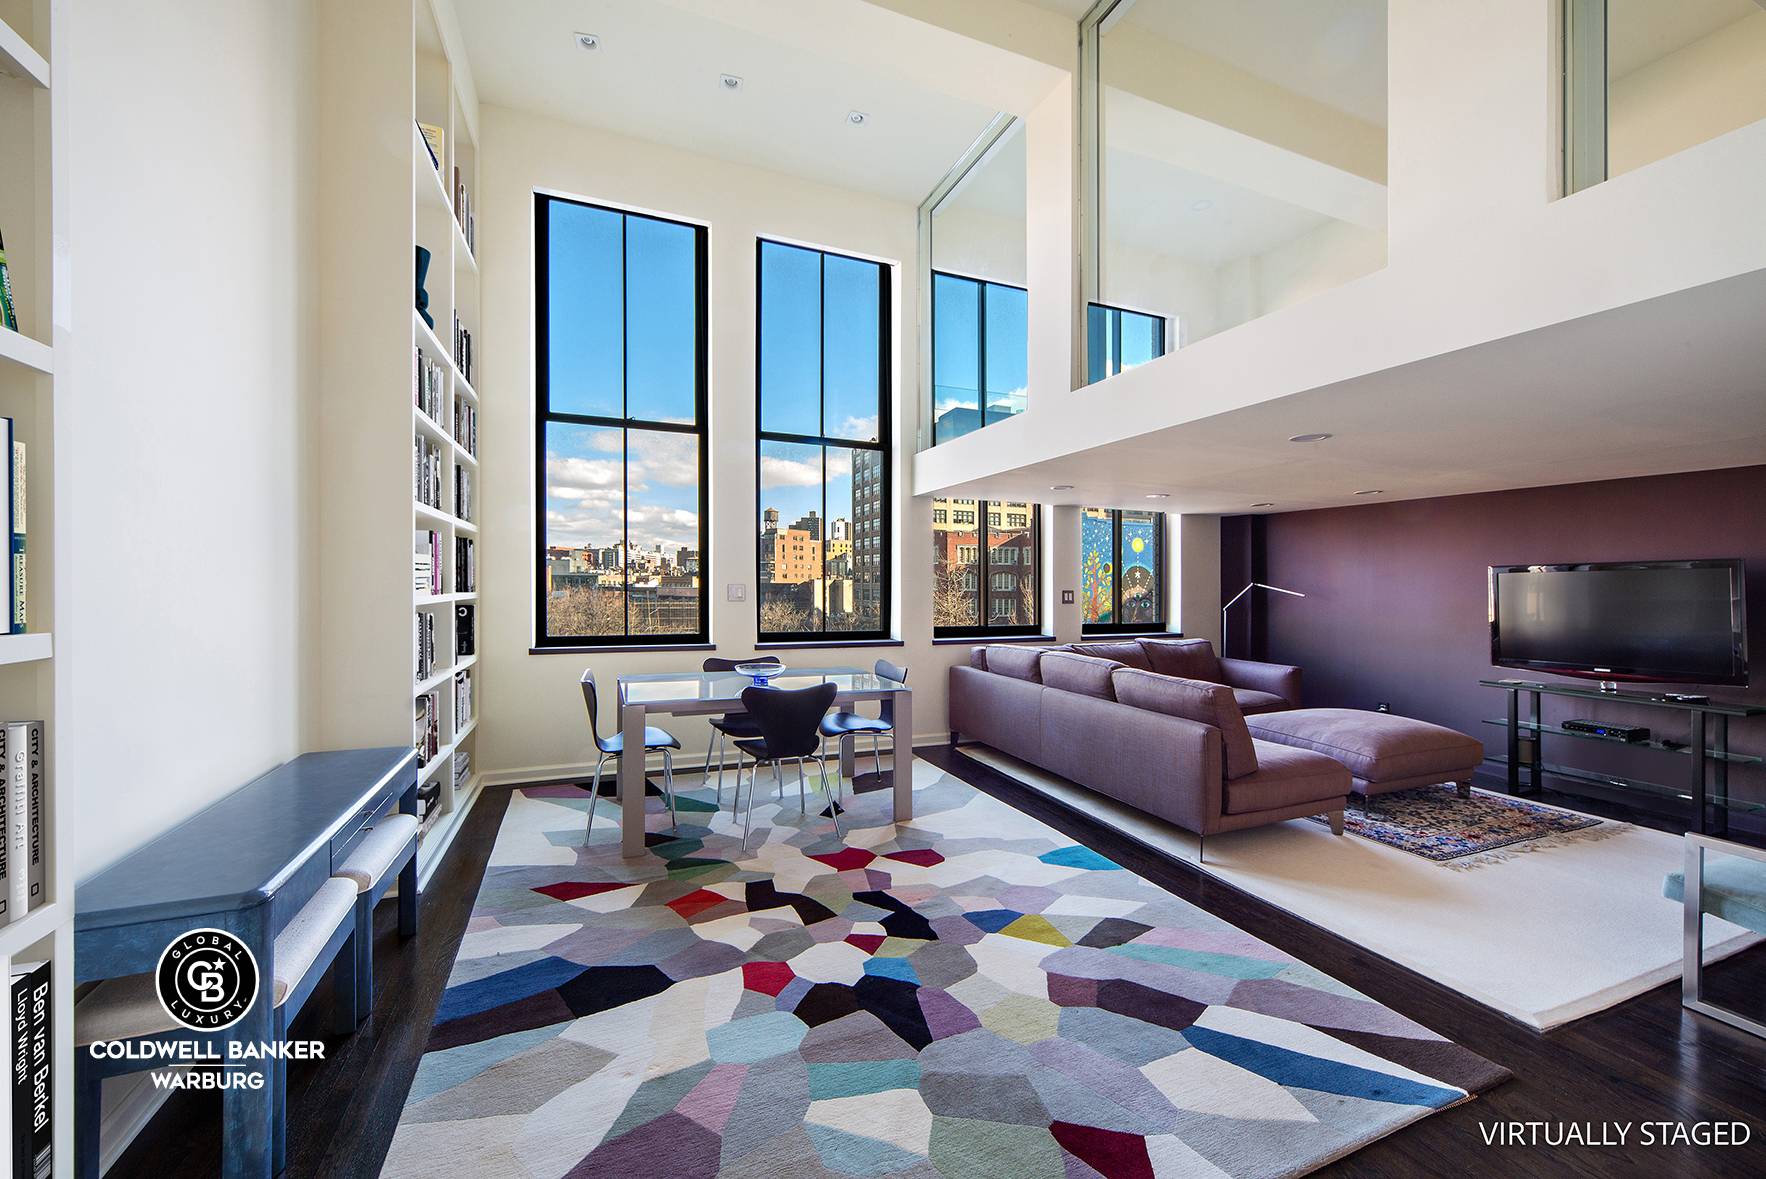 WEST VILLAGE MINT DESIGNER CONDO This 1550 square foot designer duplex condo with breathtaking views over J.